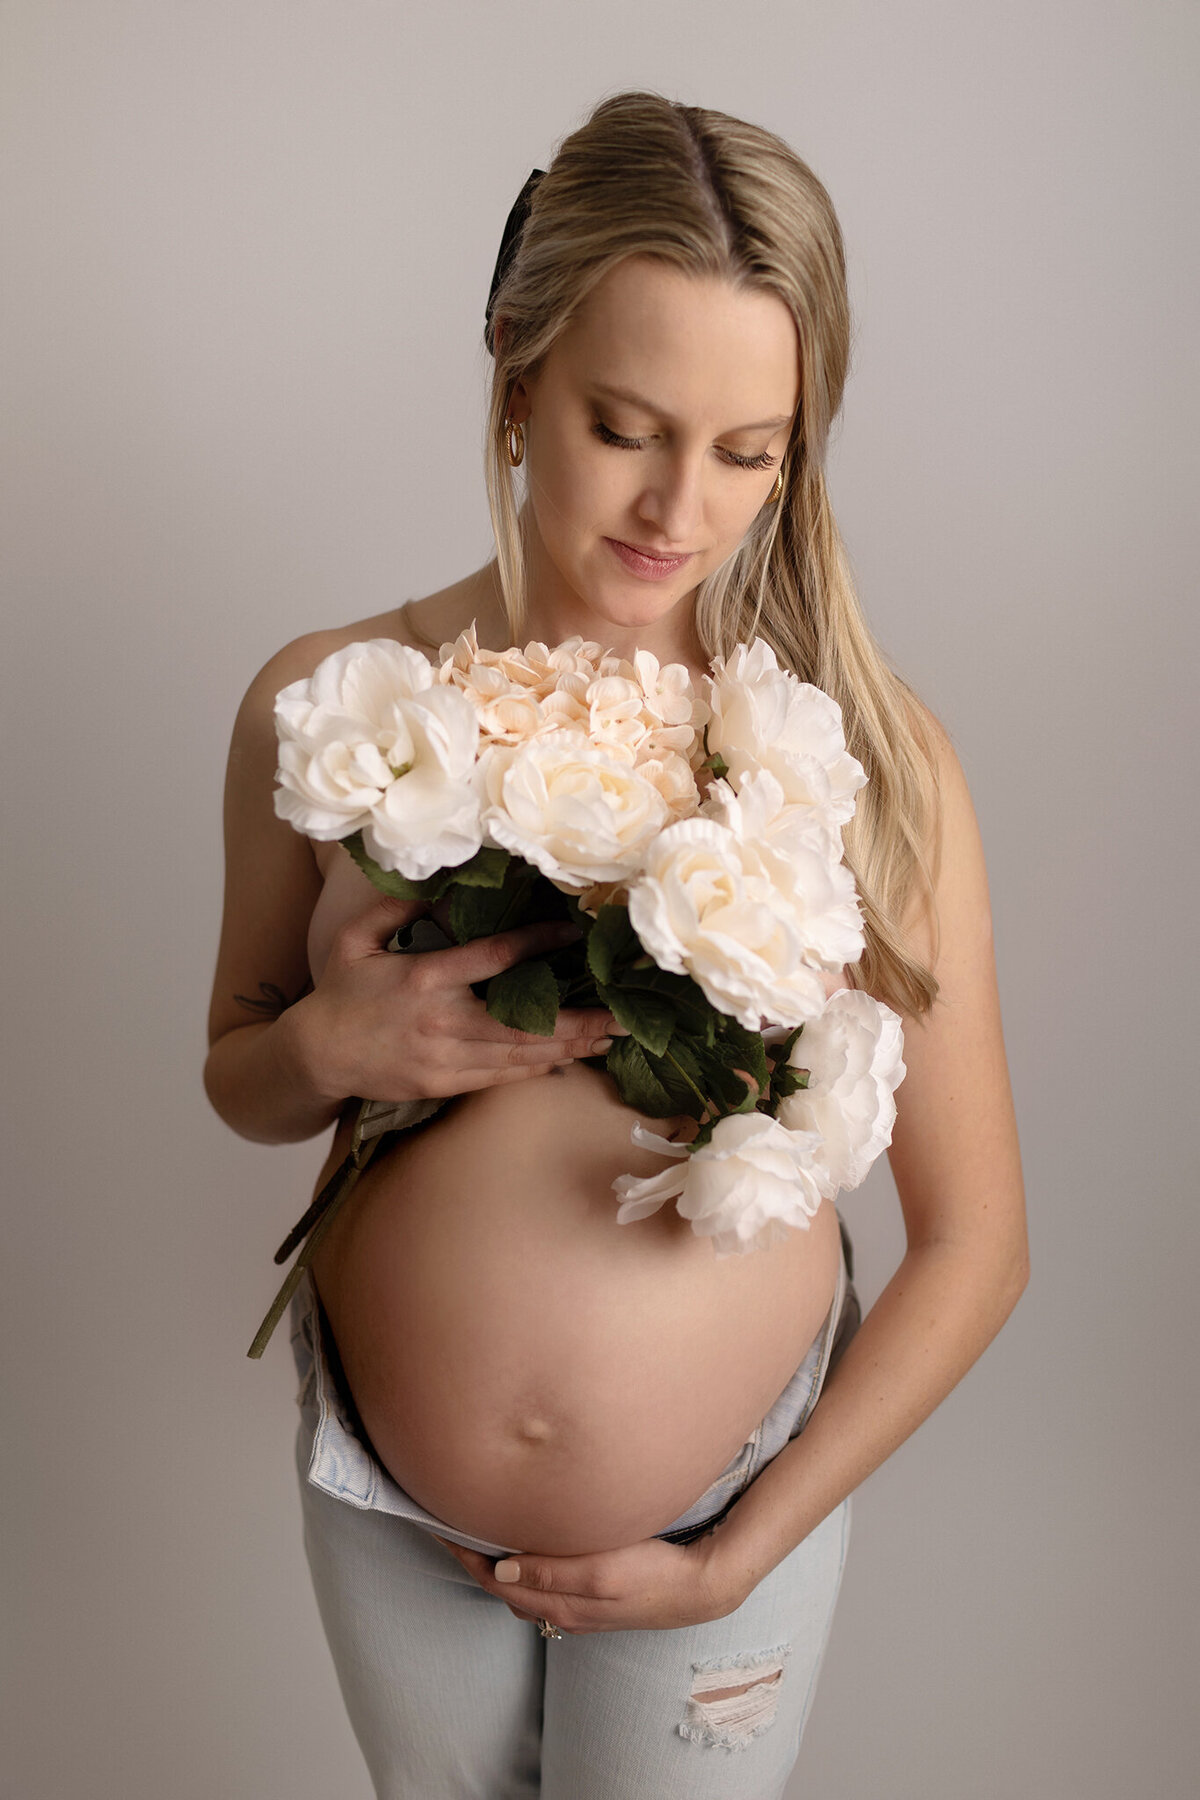 denver maternity photographers